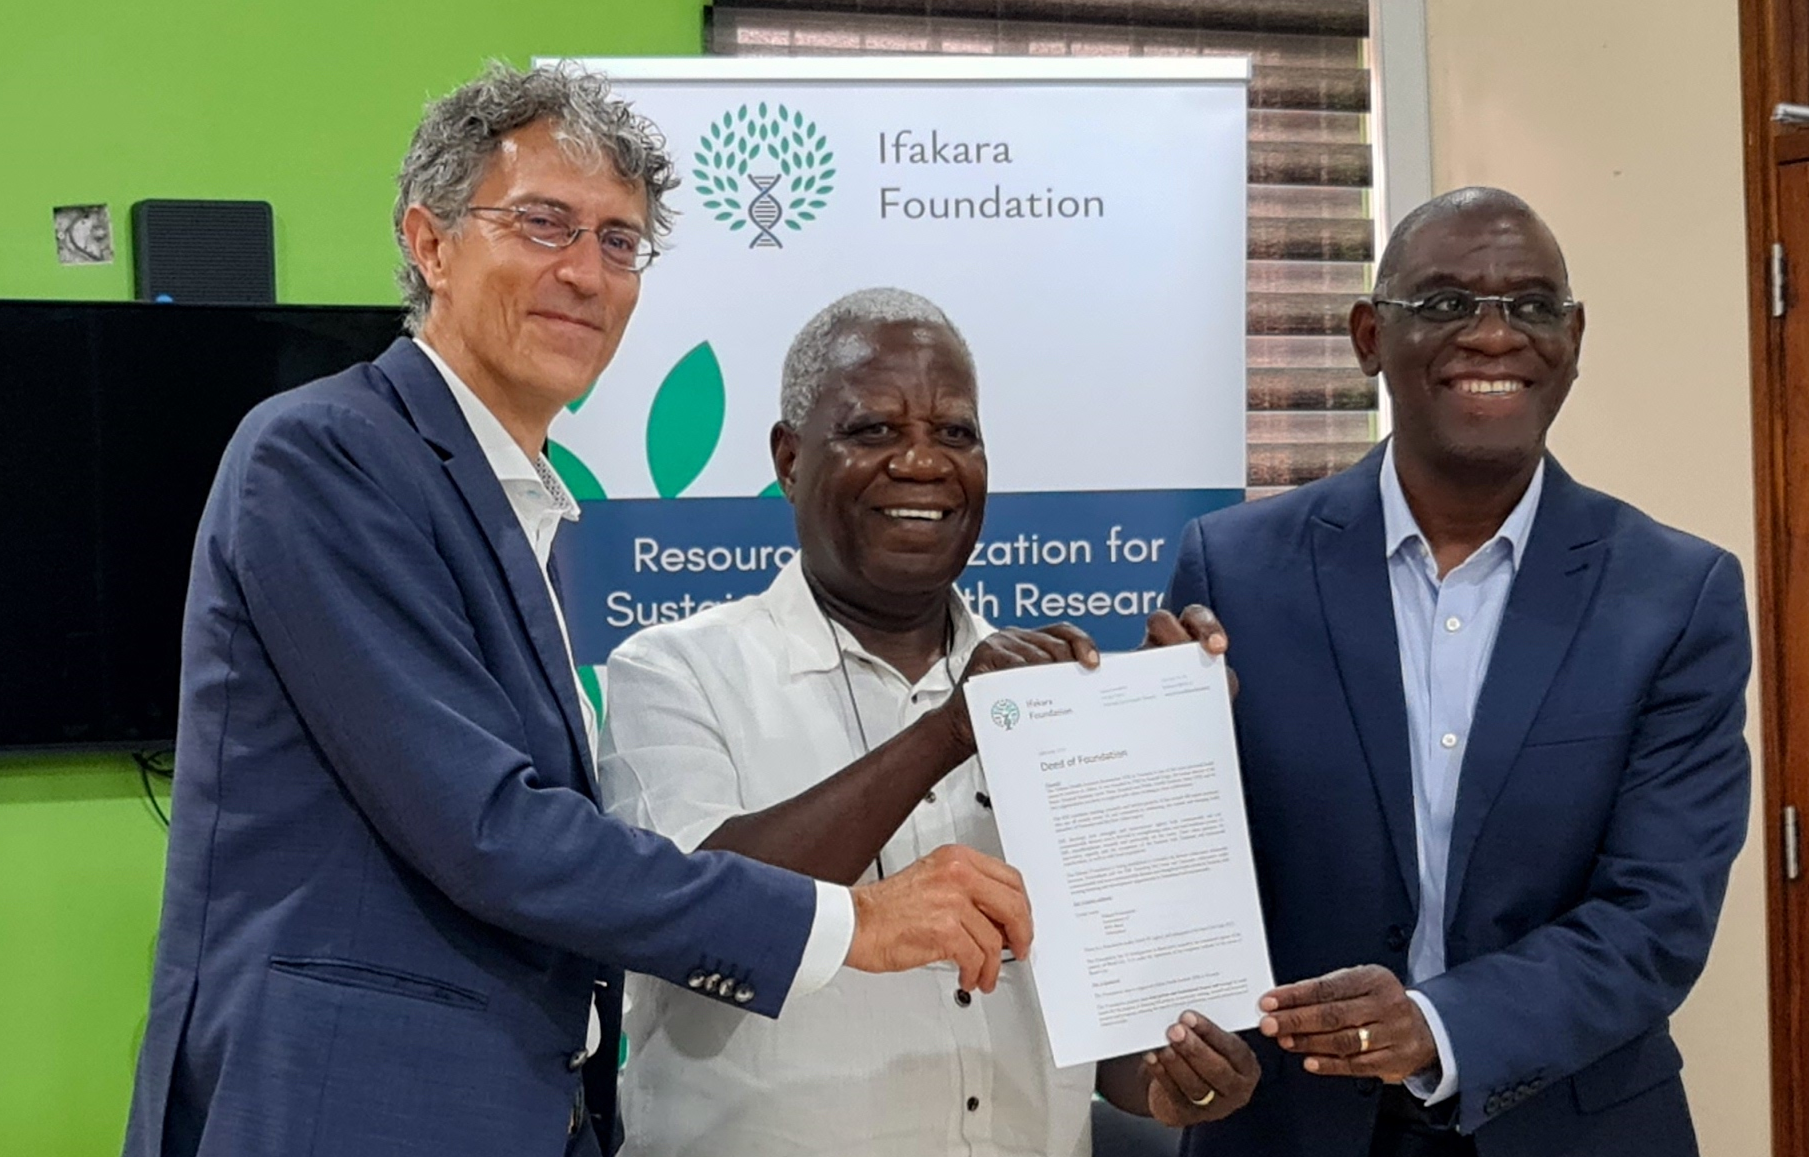 SIGNING: Ifakara, partner sign Foundation Constitution